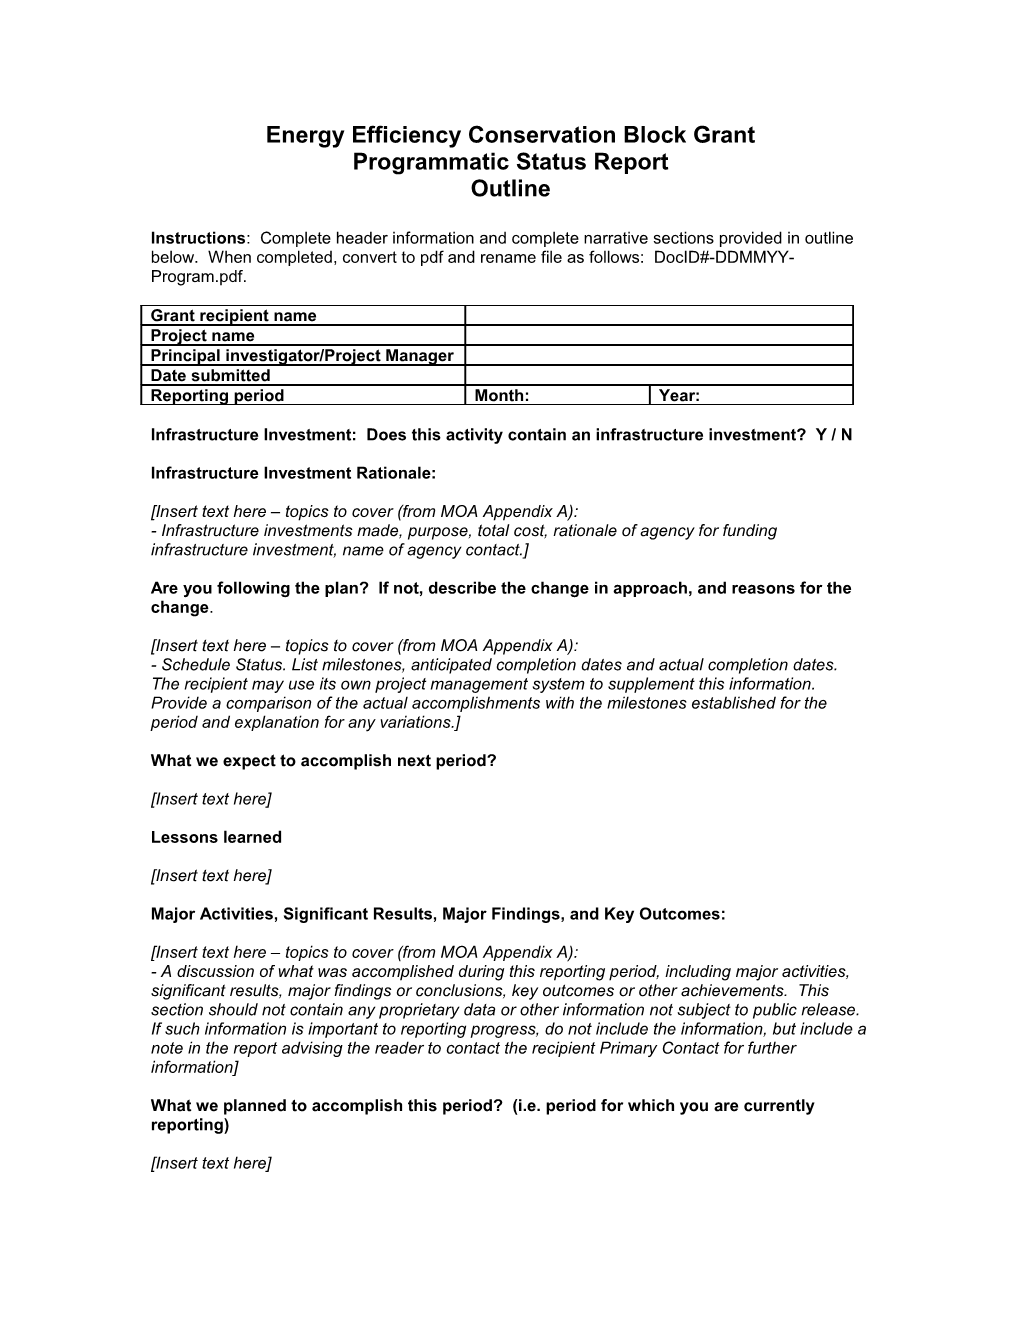 Programmatic Status Report